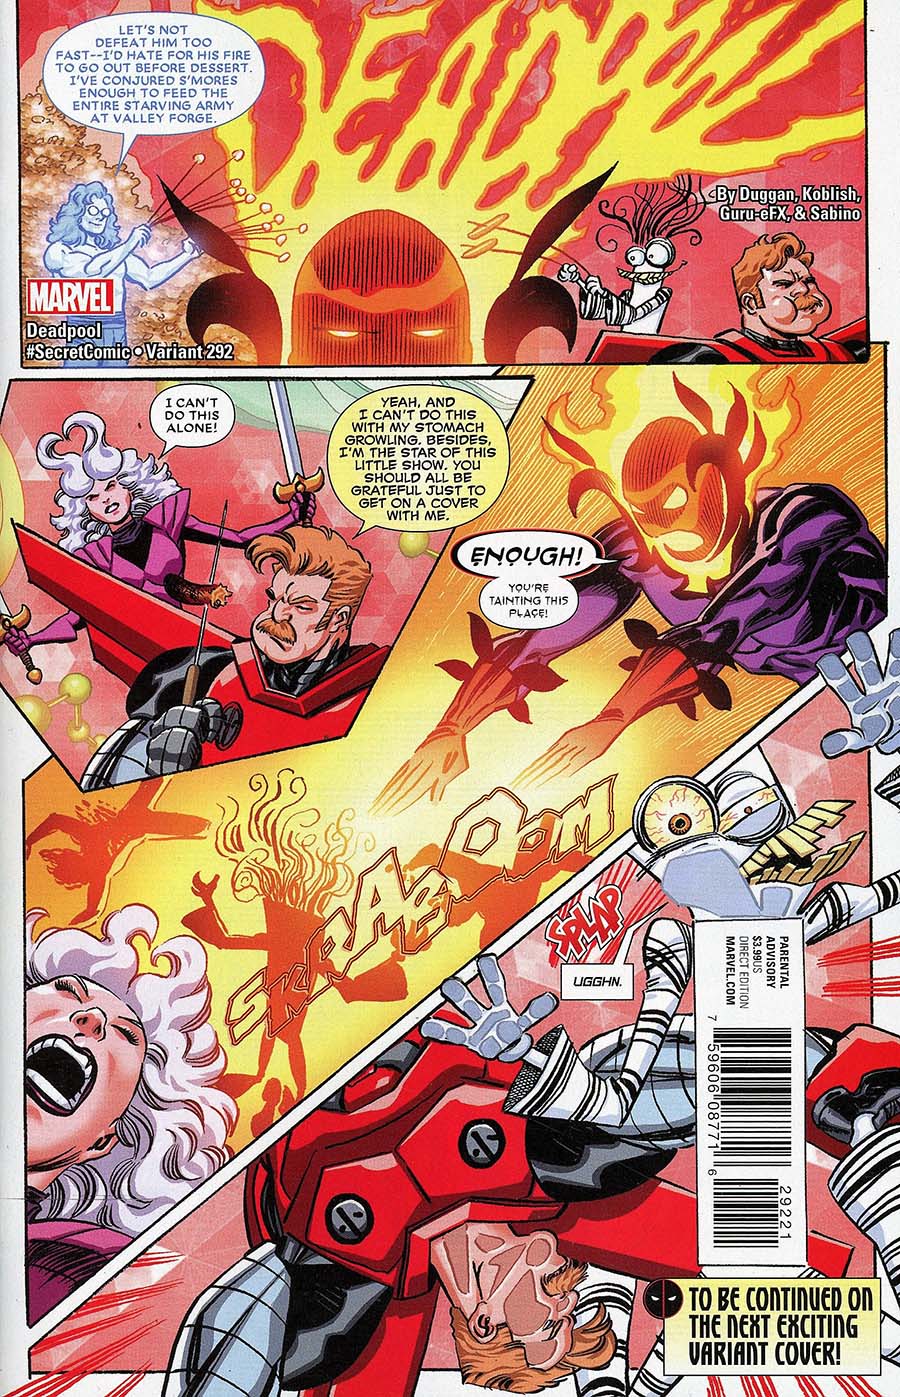 Despicable Deadpool #292 Cover B Variant Scott Koblish Secret Comic Cover (Marvel Legacy Tie-In)